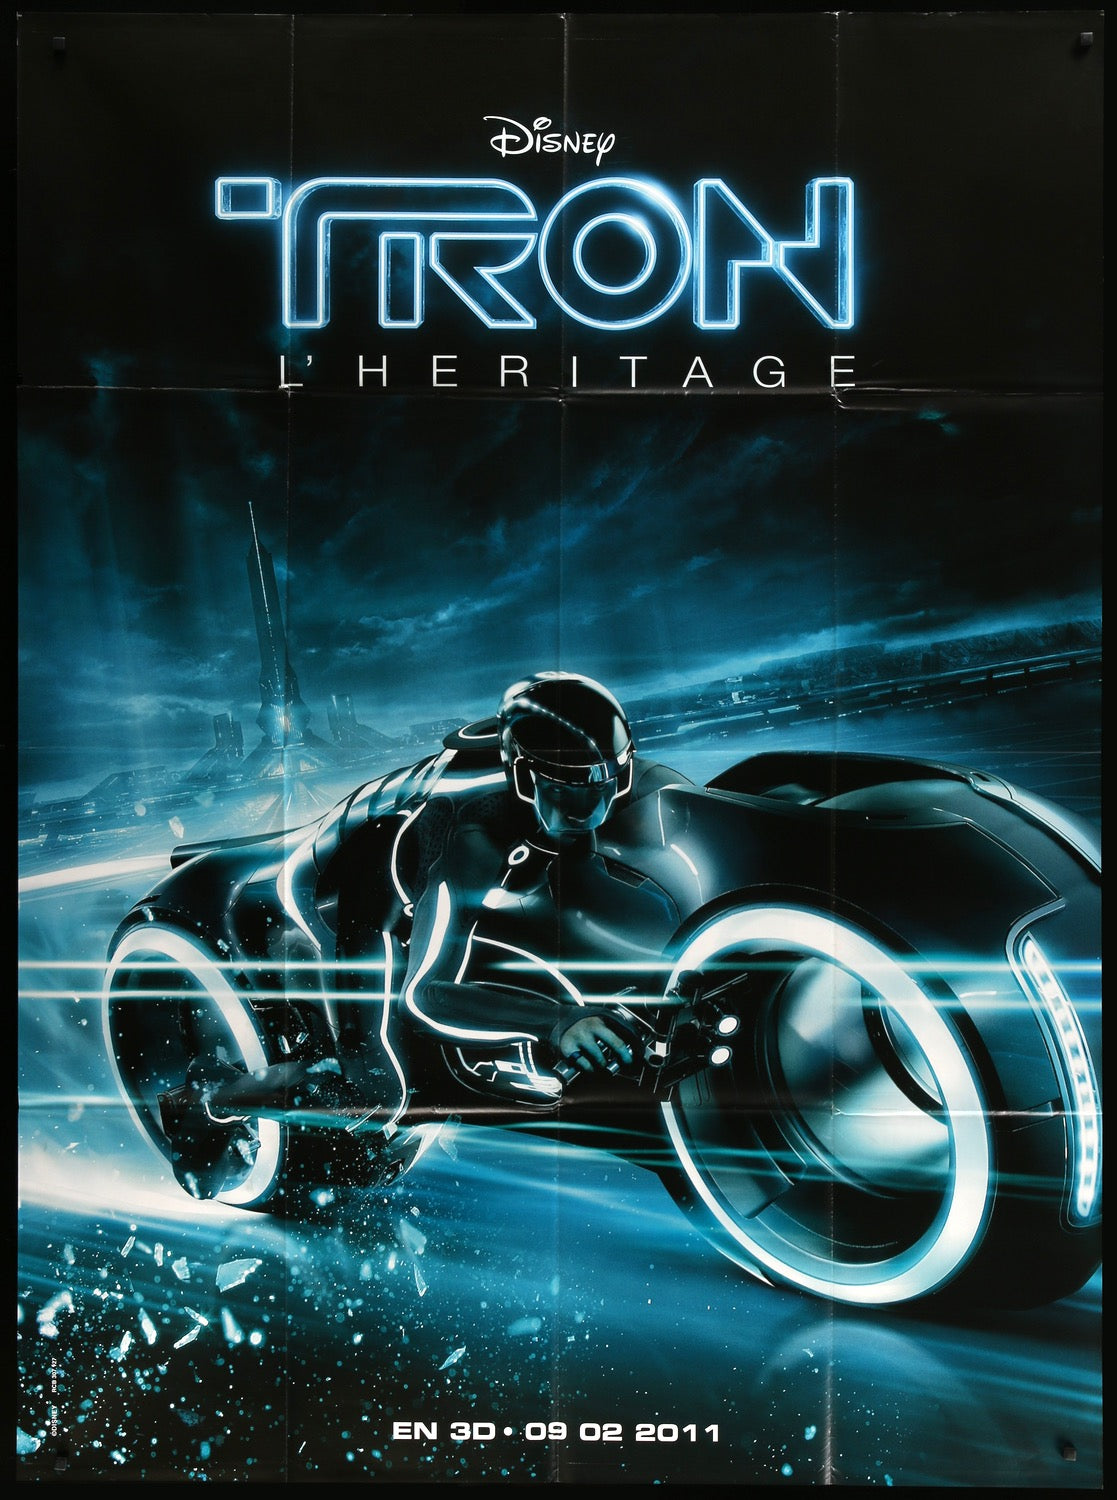 Tron Legacy (2010) original movie poster for sale at Original Film Art